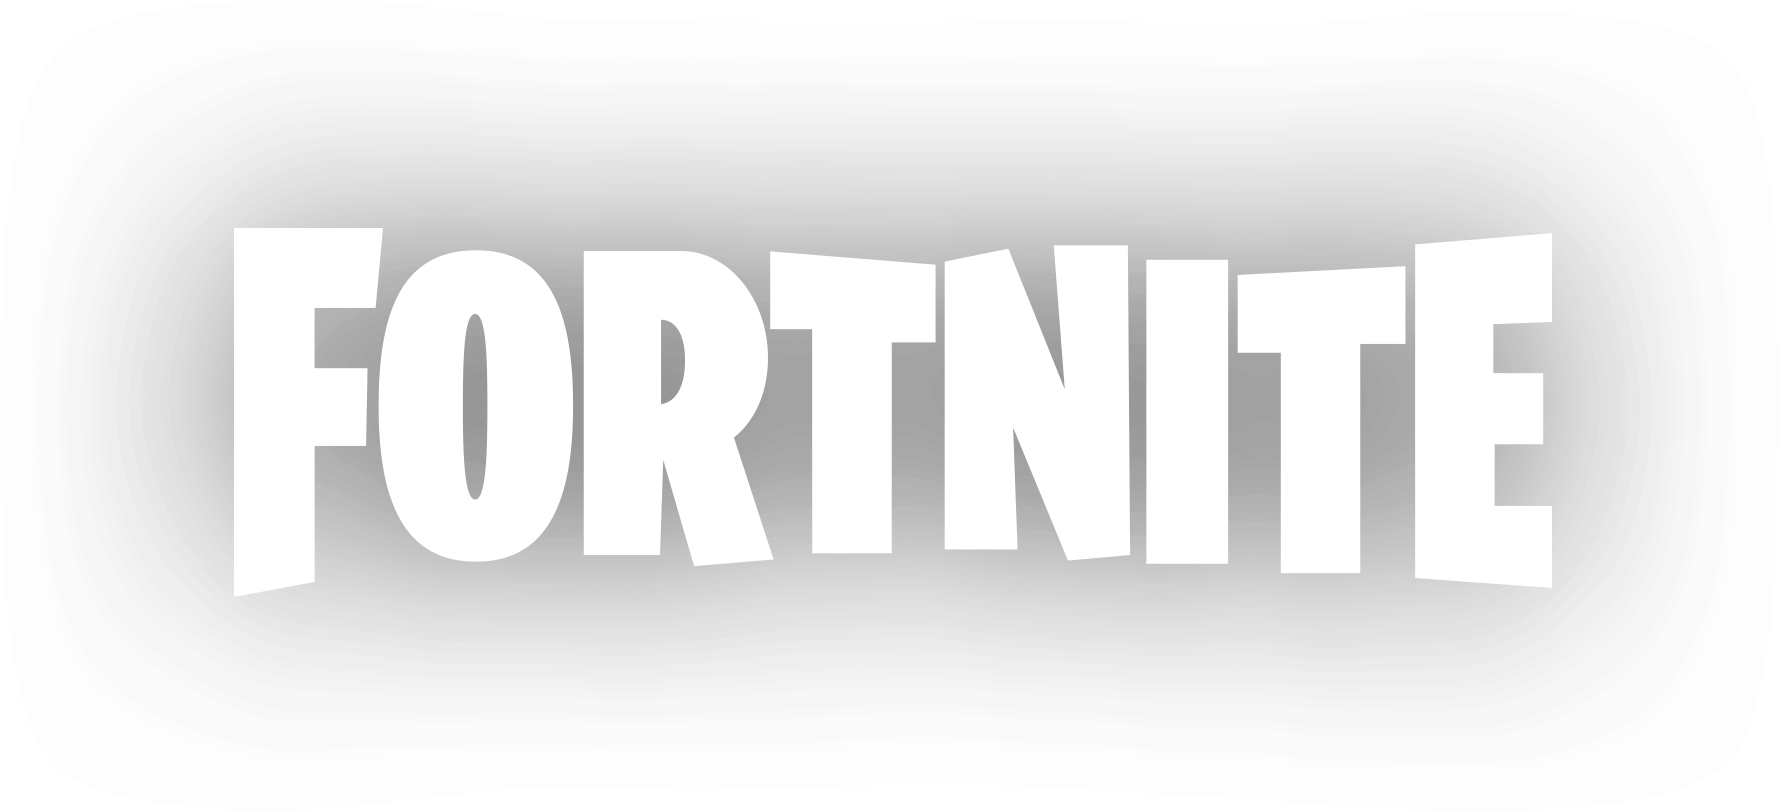 Fornite Logo - Fortnite - THE BATTLE IS BUILDING